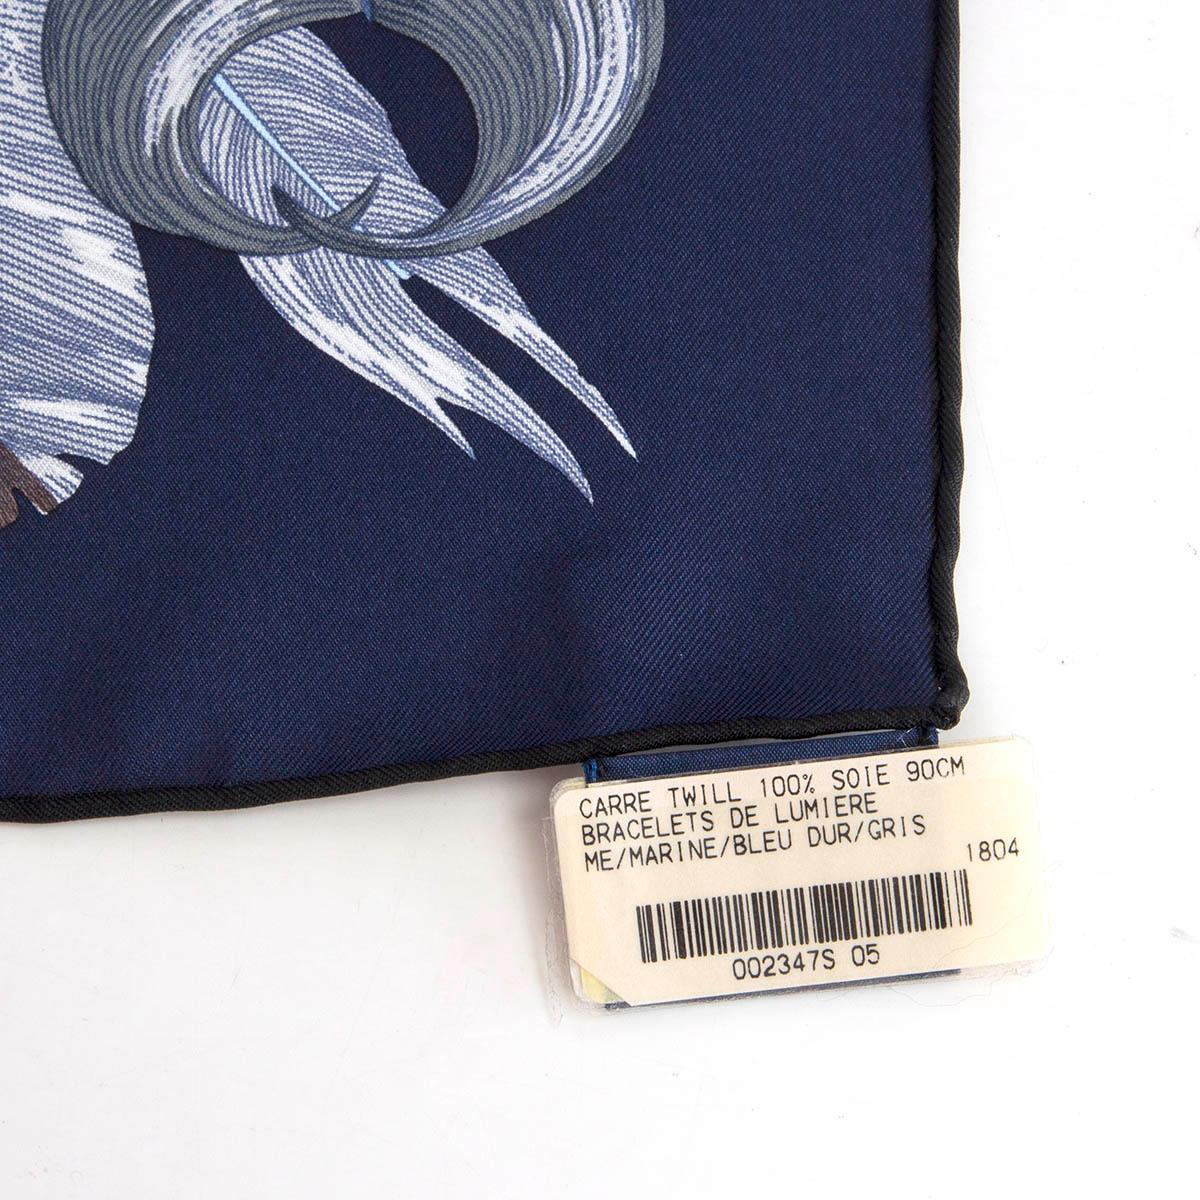 HERMES navy blue silk BRACELETS DE LUMIERE 90 TWILL Scarf Marine/Bleu Dur/Gris In New Condition For Sale In Zürich, CH